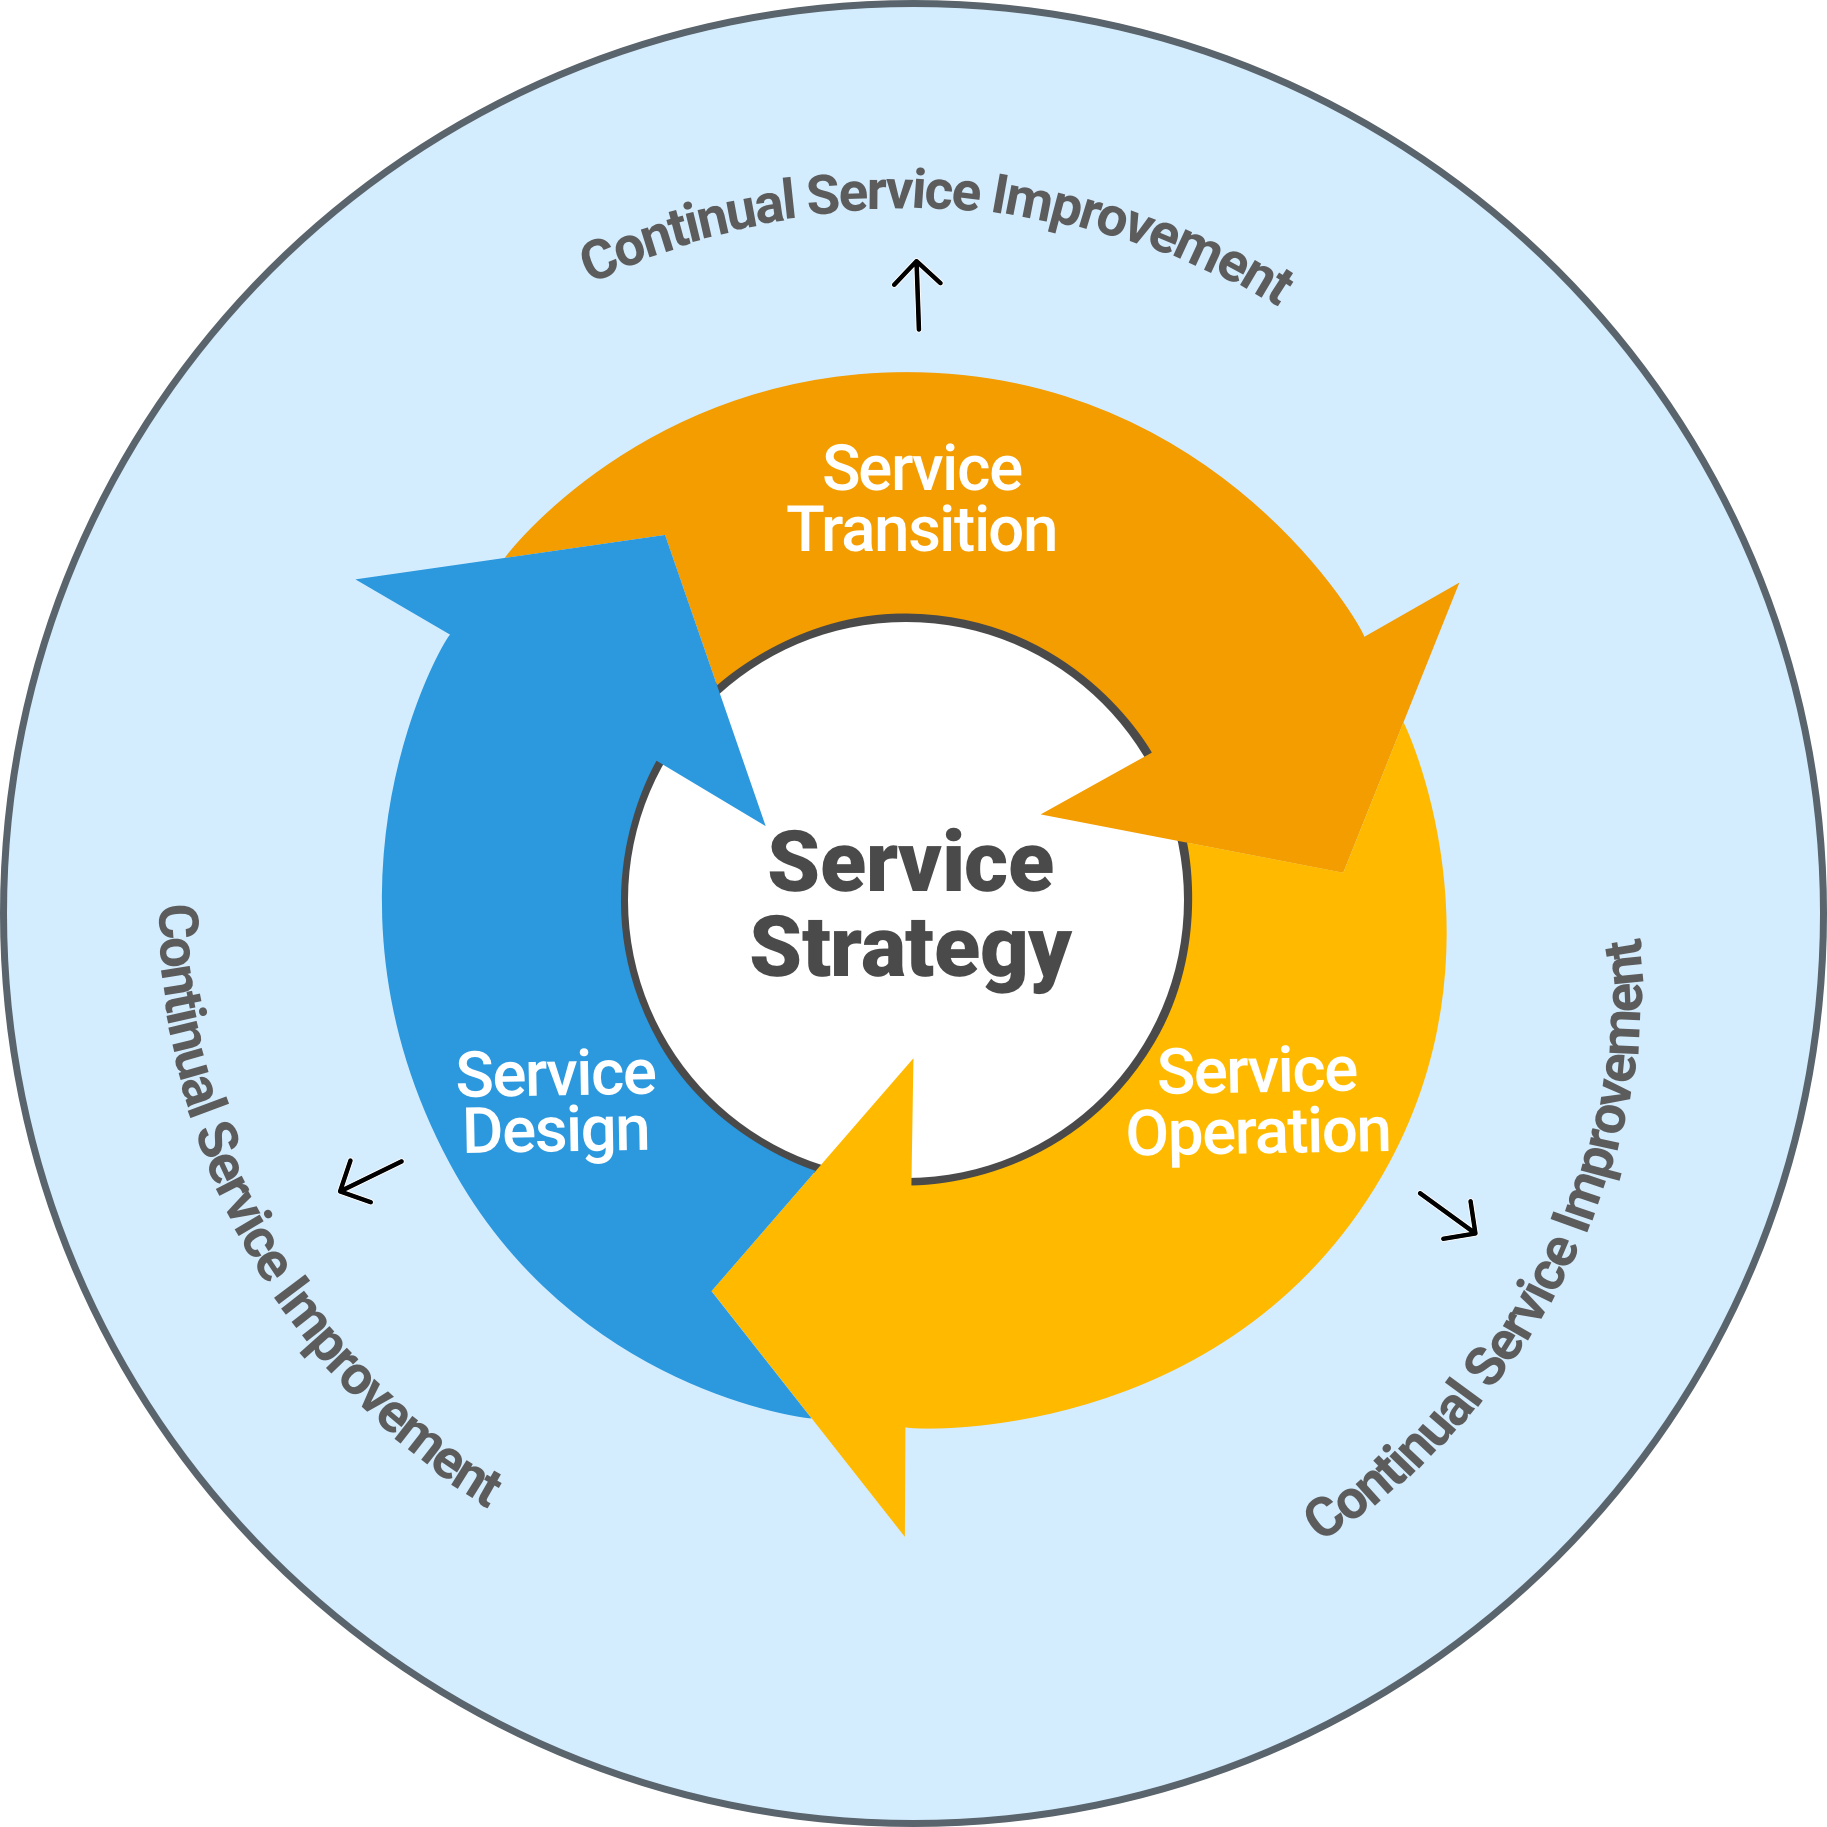 ITIL Service Strategy Life Cycle - Service Design, Service Transition & Service Operation